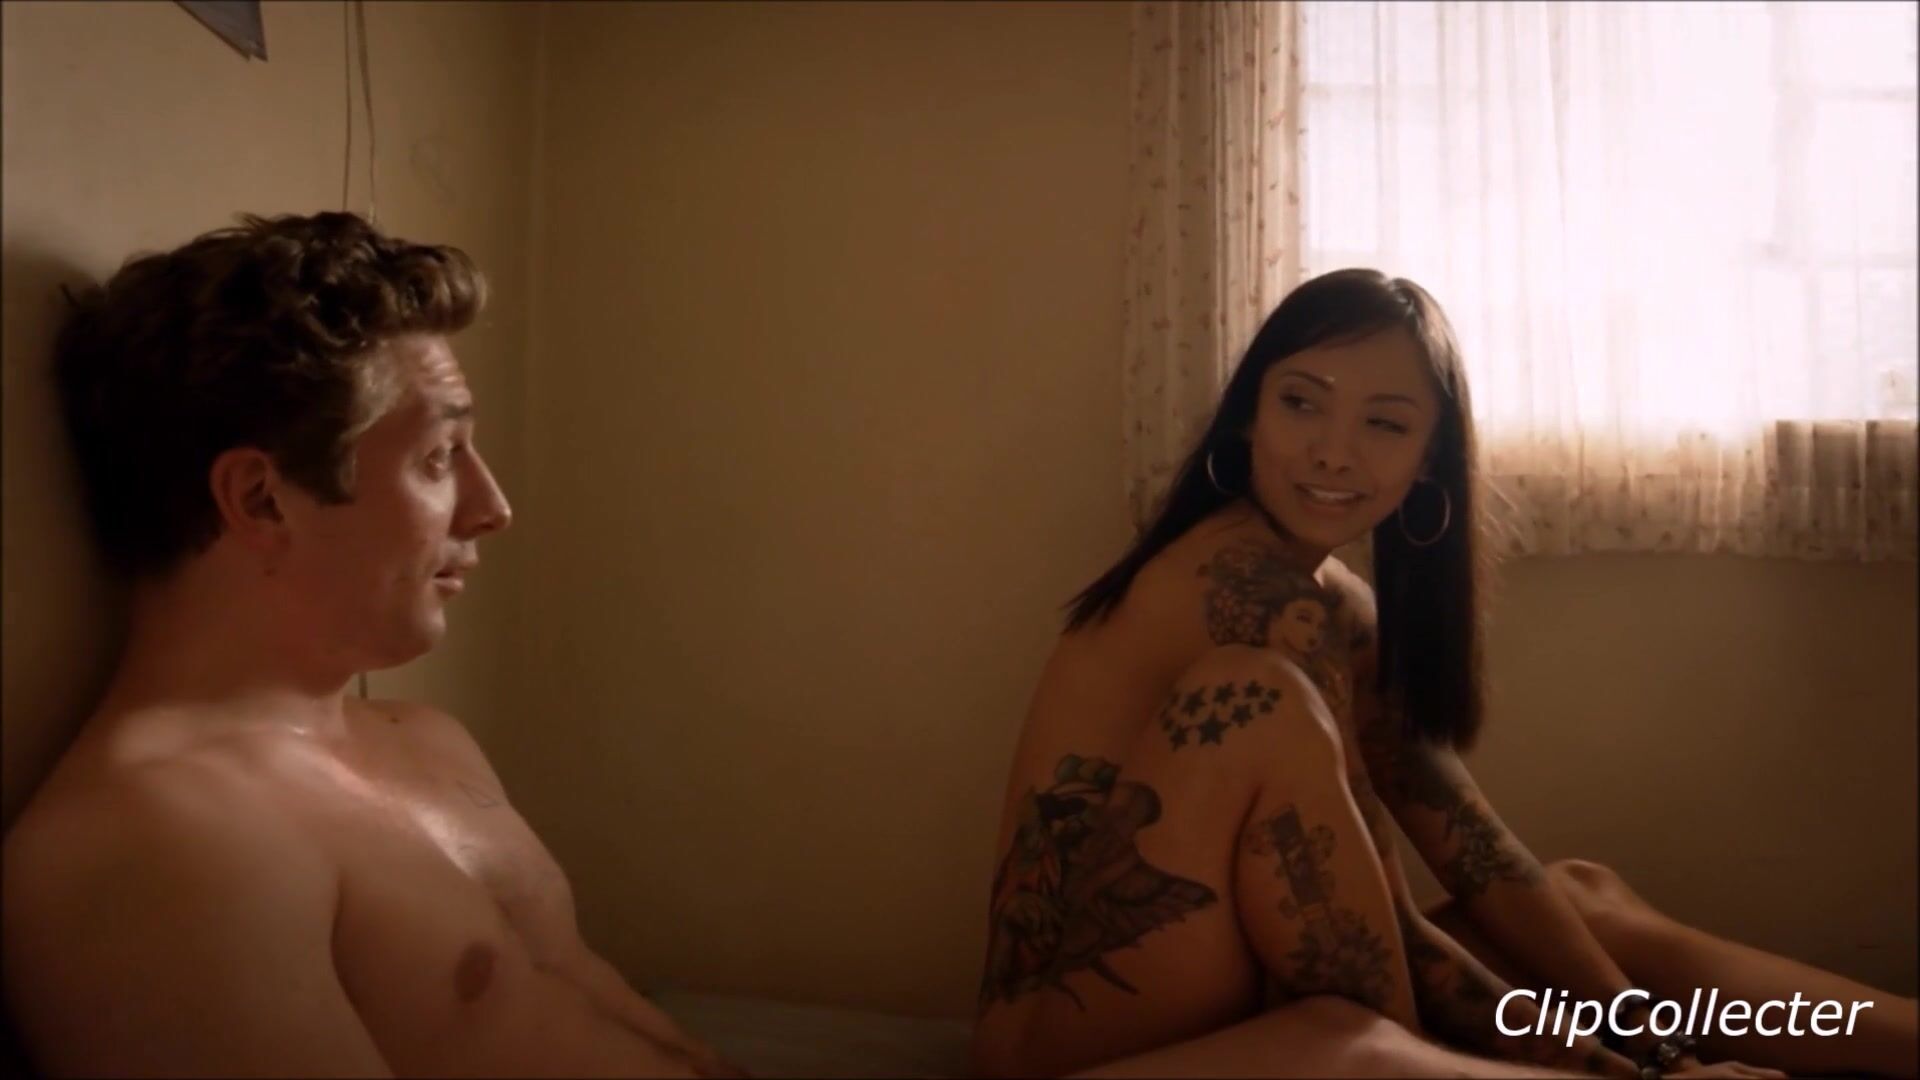 Dominant Hot nude interracial scenes with hot girls from erotic TV series Shameless (season 8) Masterbation - 1